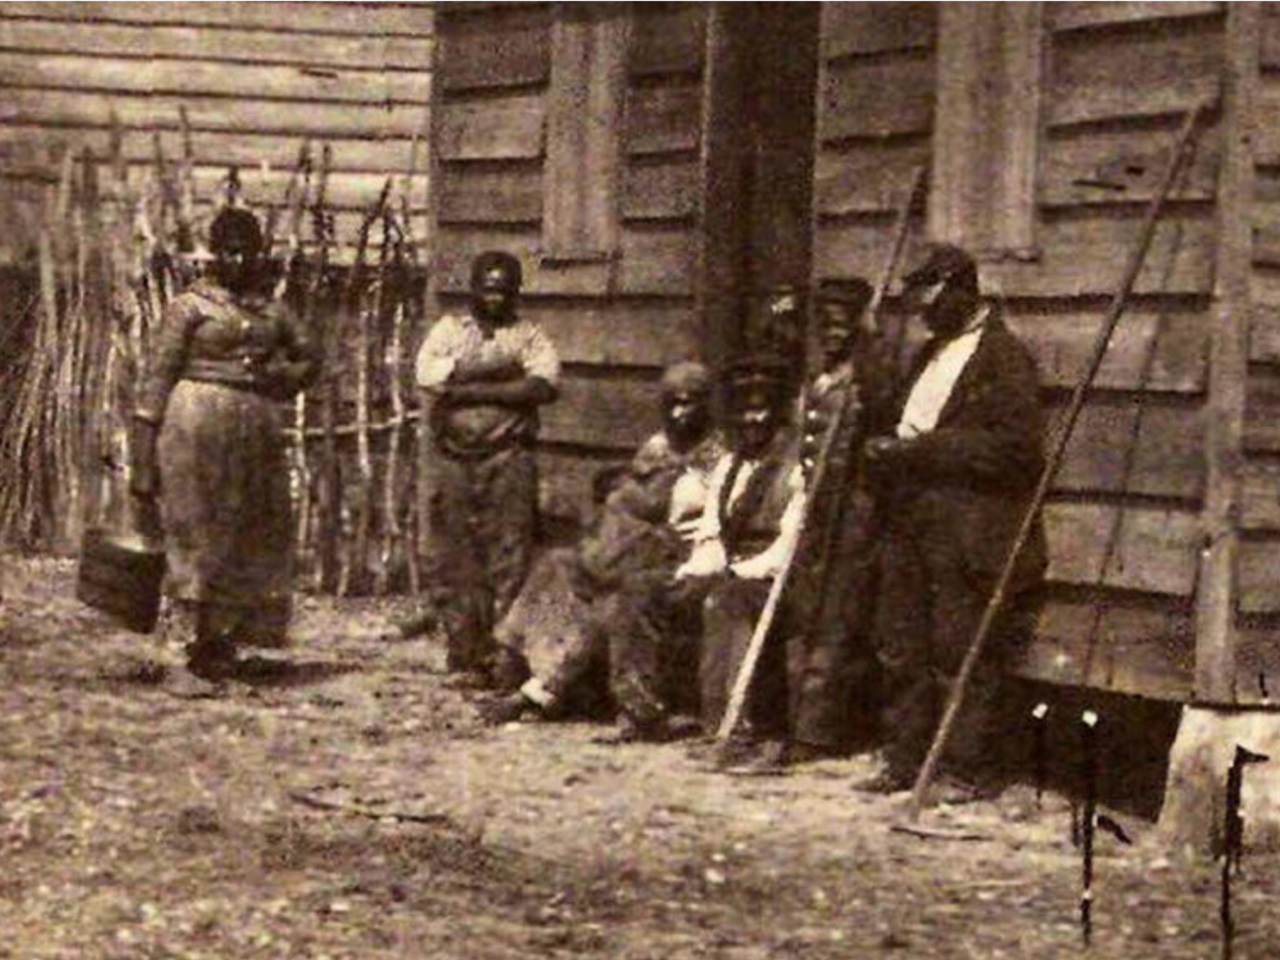 Group of Negros at Rhett's Plantation